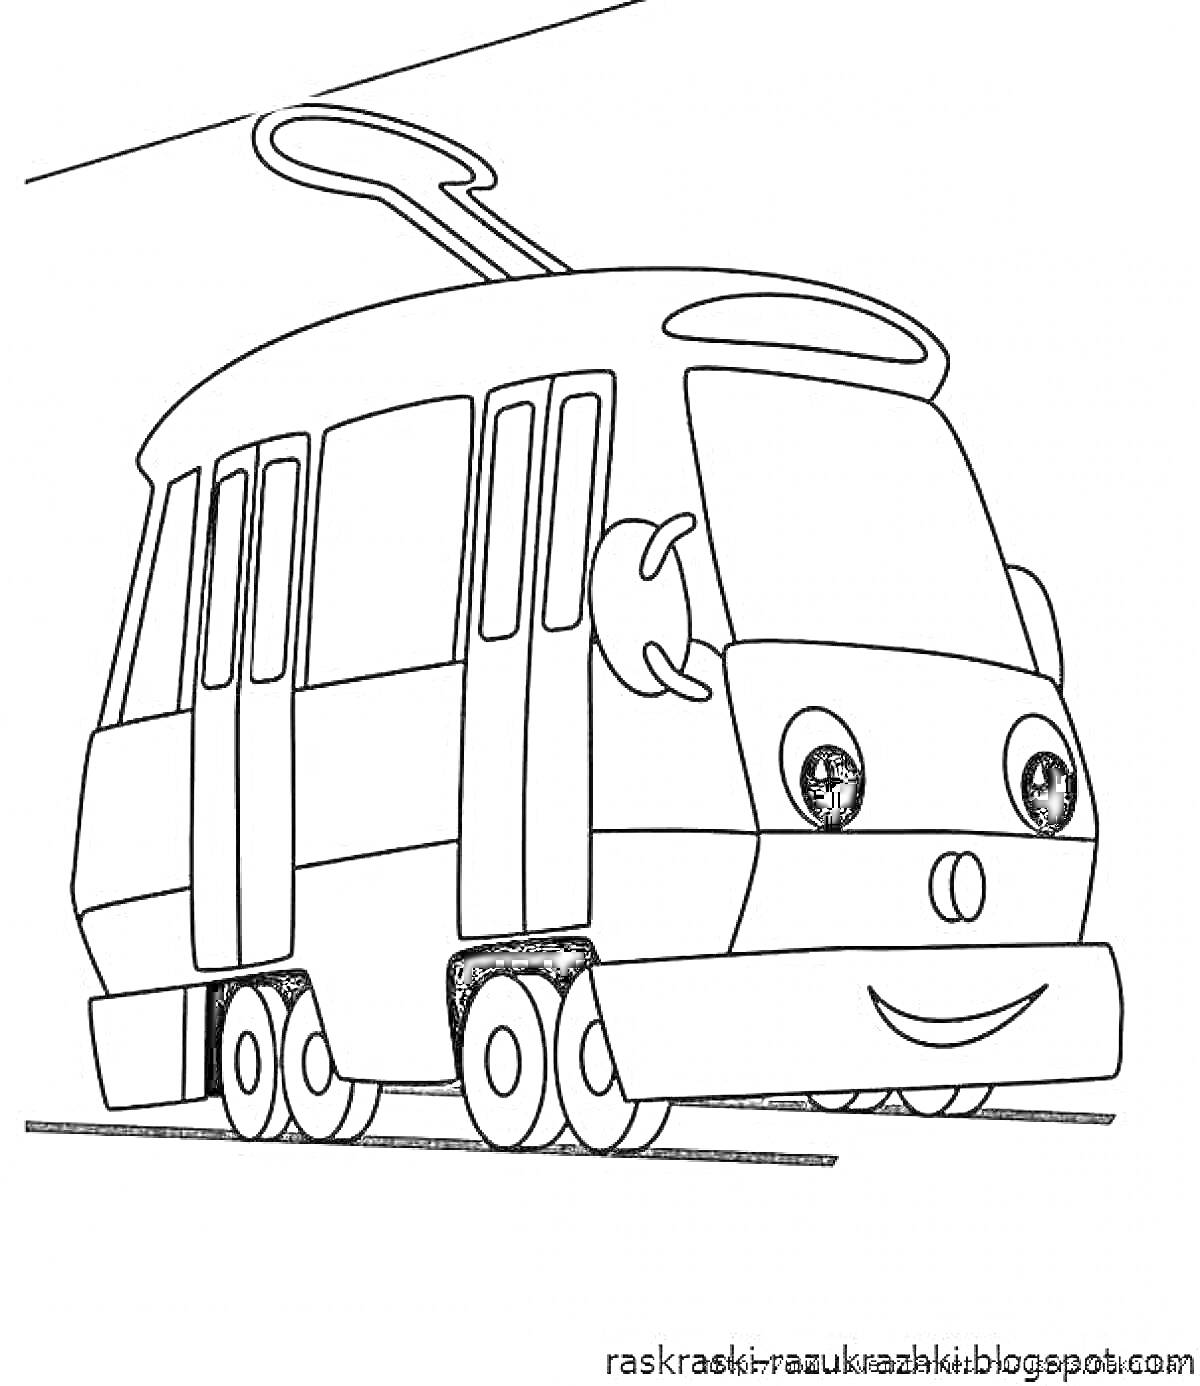 На раскраске изображено: Трамвай, Транспорт, Рельсы, Улыбка, Глаза